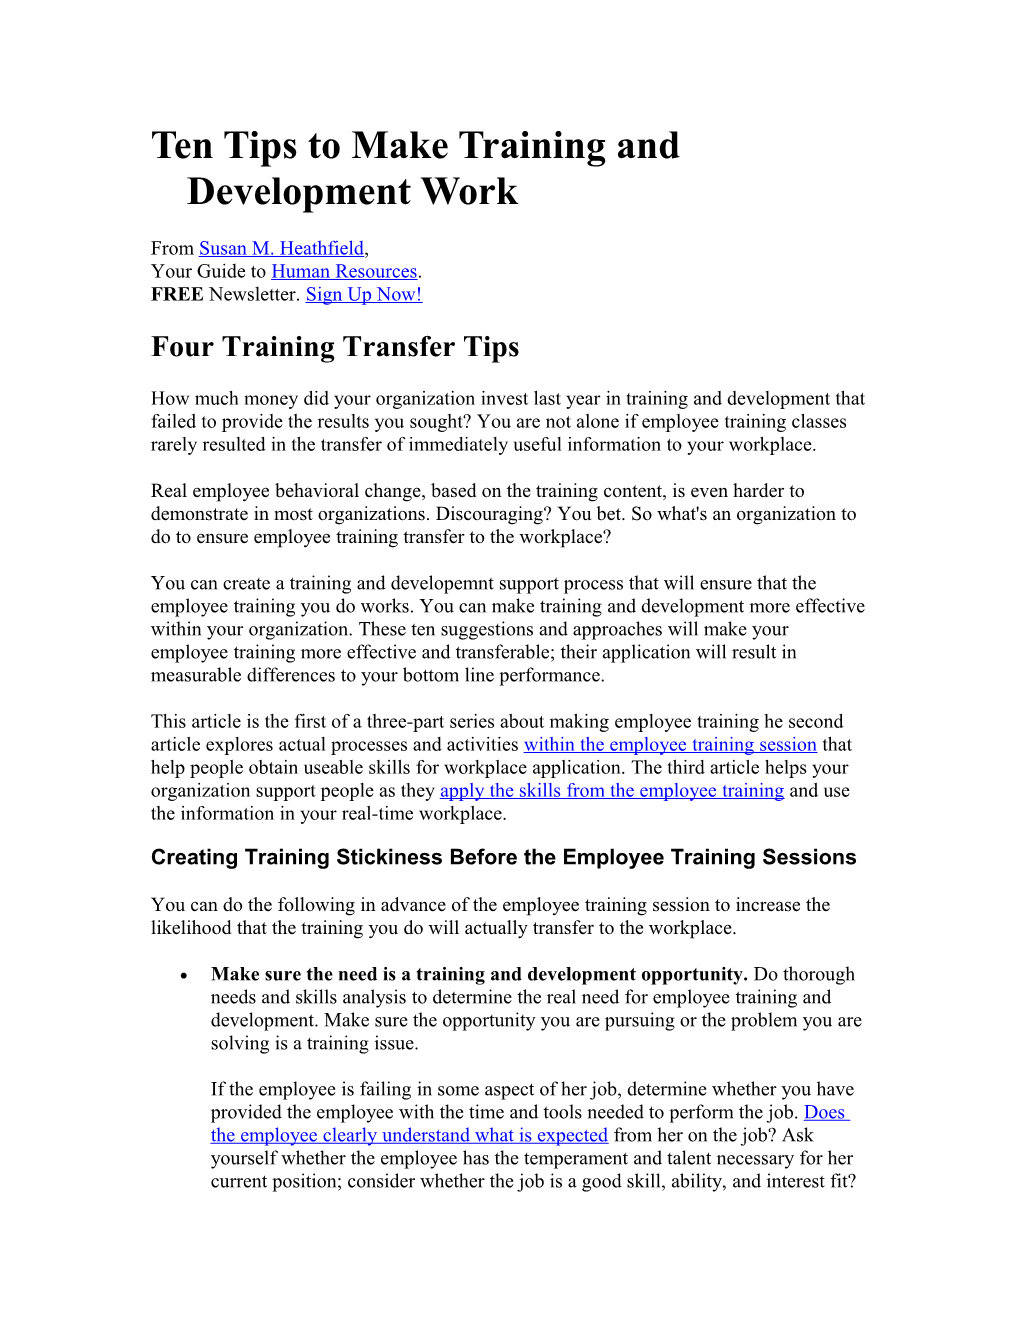 Ten Tips to Make Training and Development Work